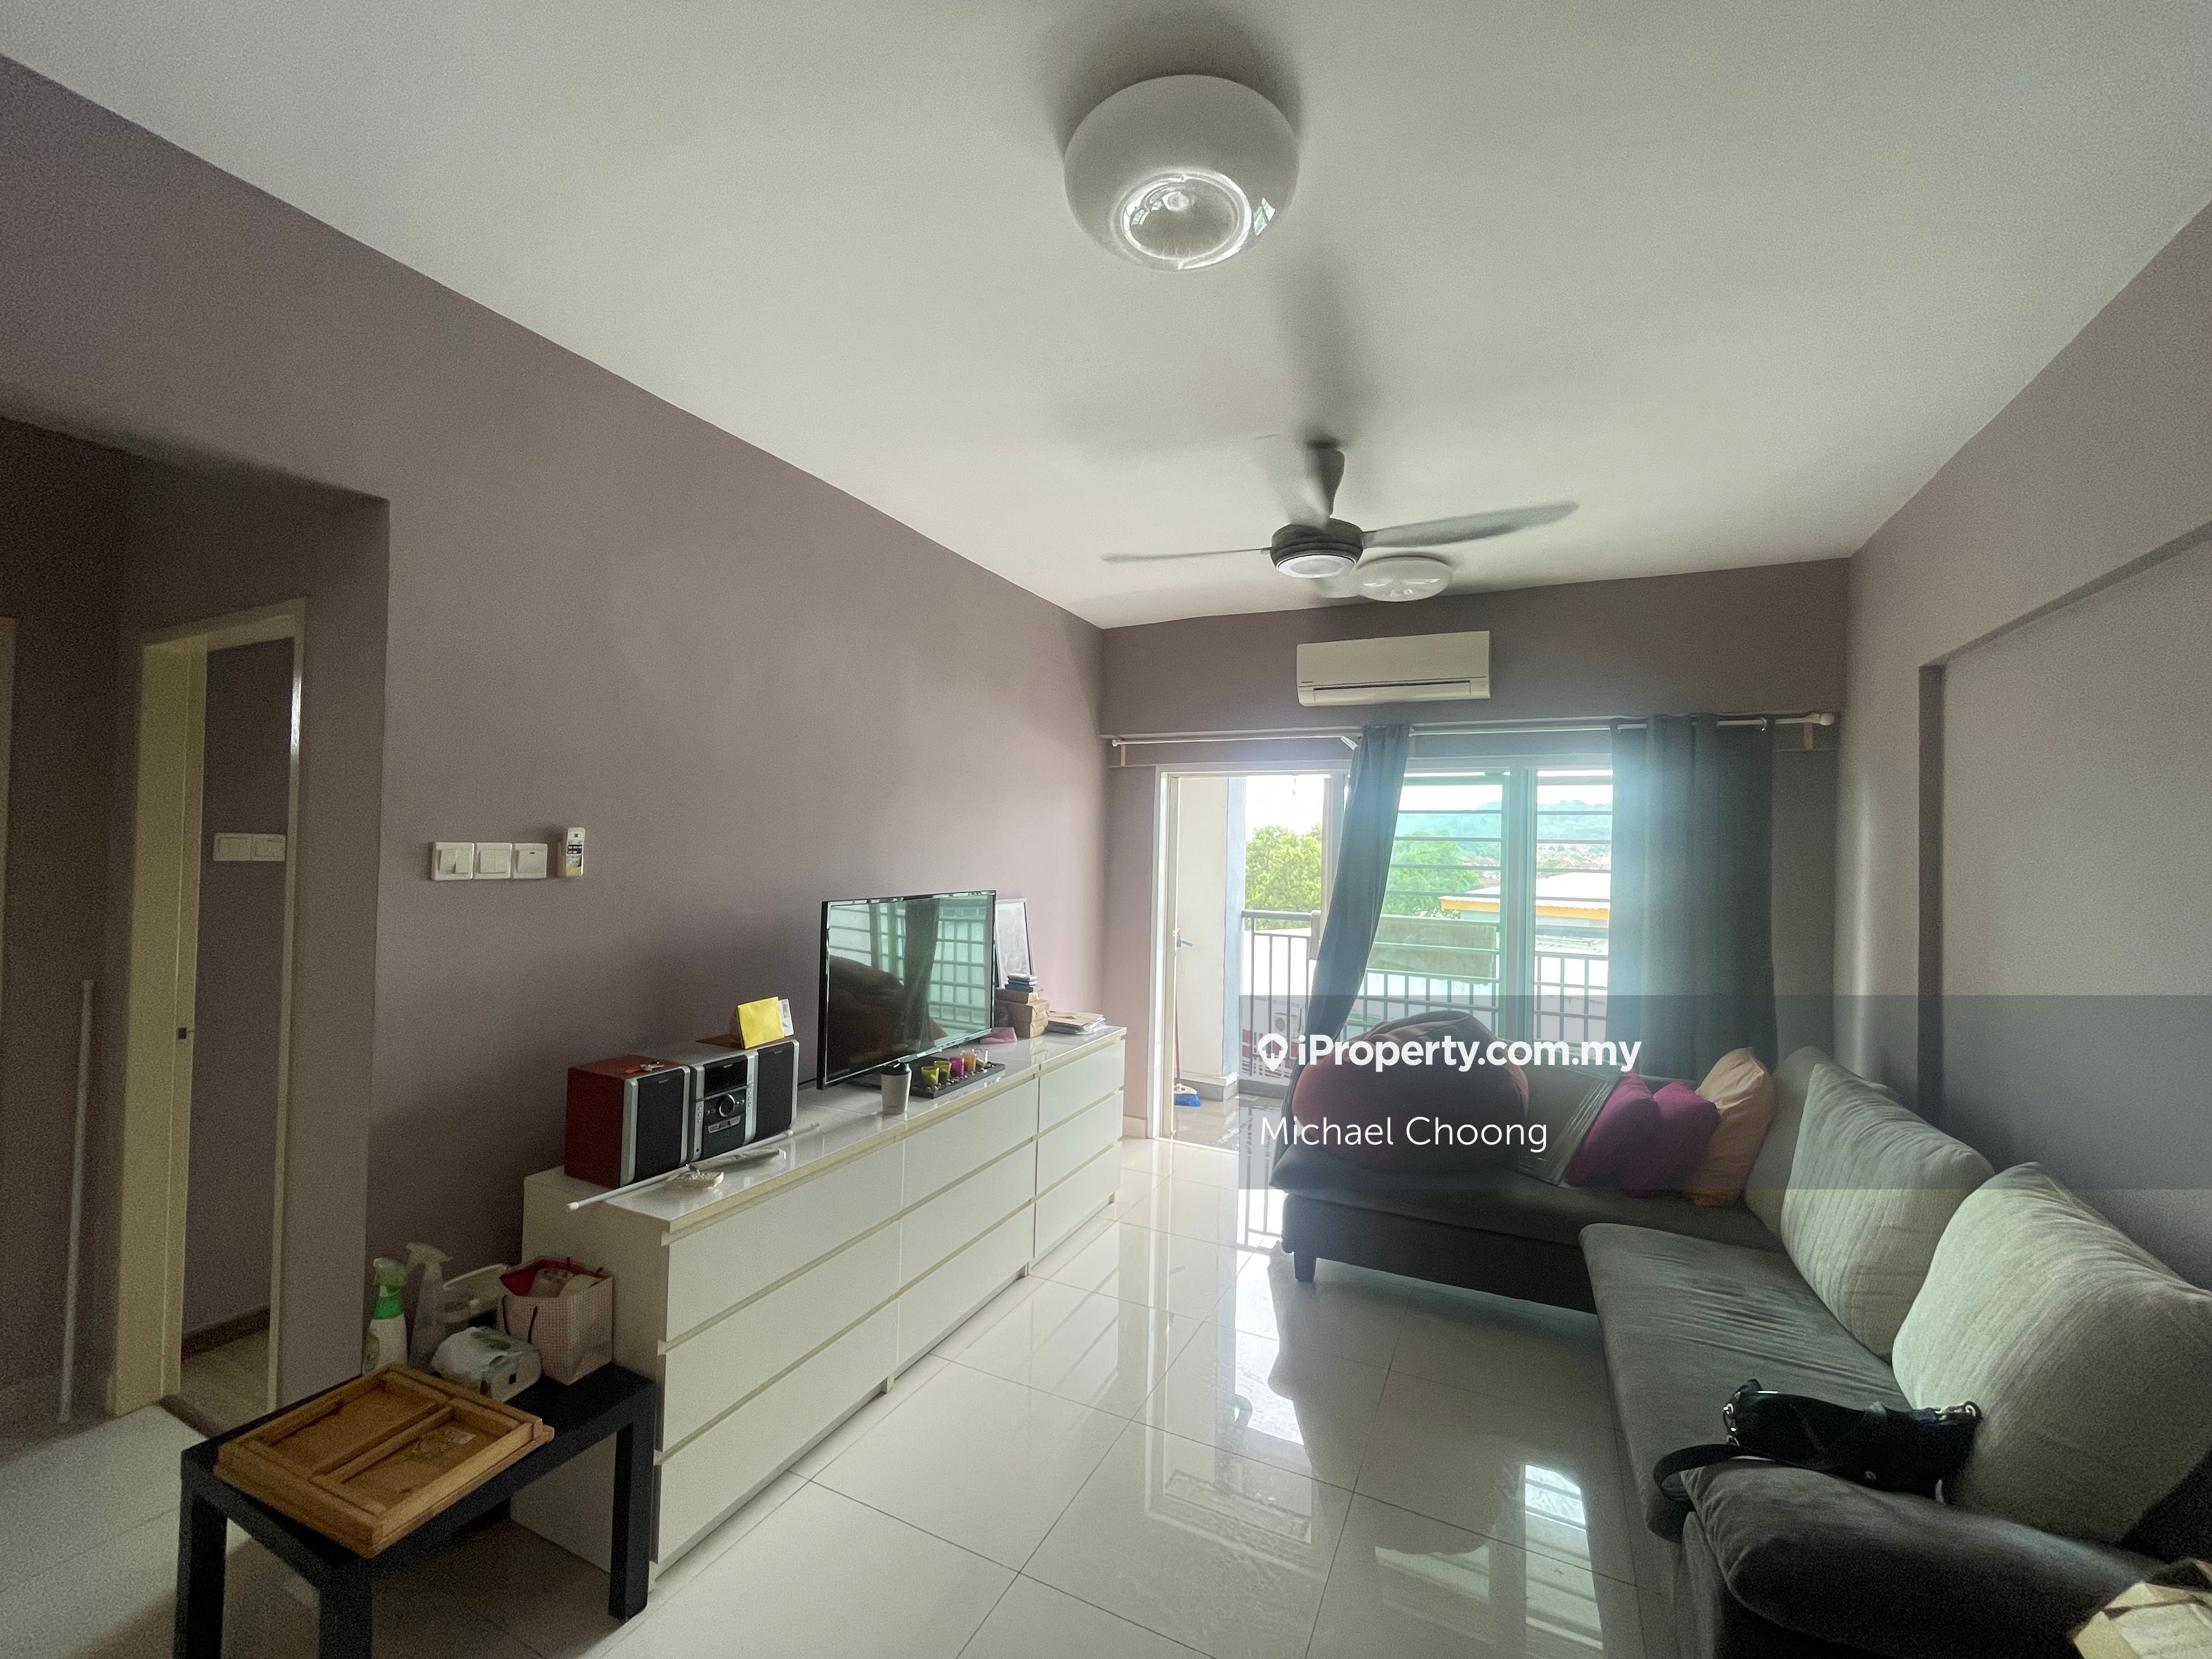 Casa Tropika Condominium 3 bedrooms for sale in Puchong, Selangor ...